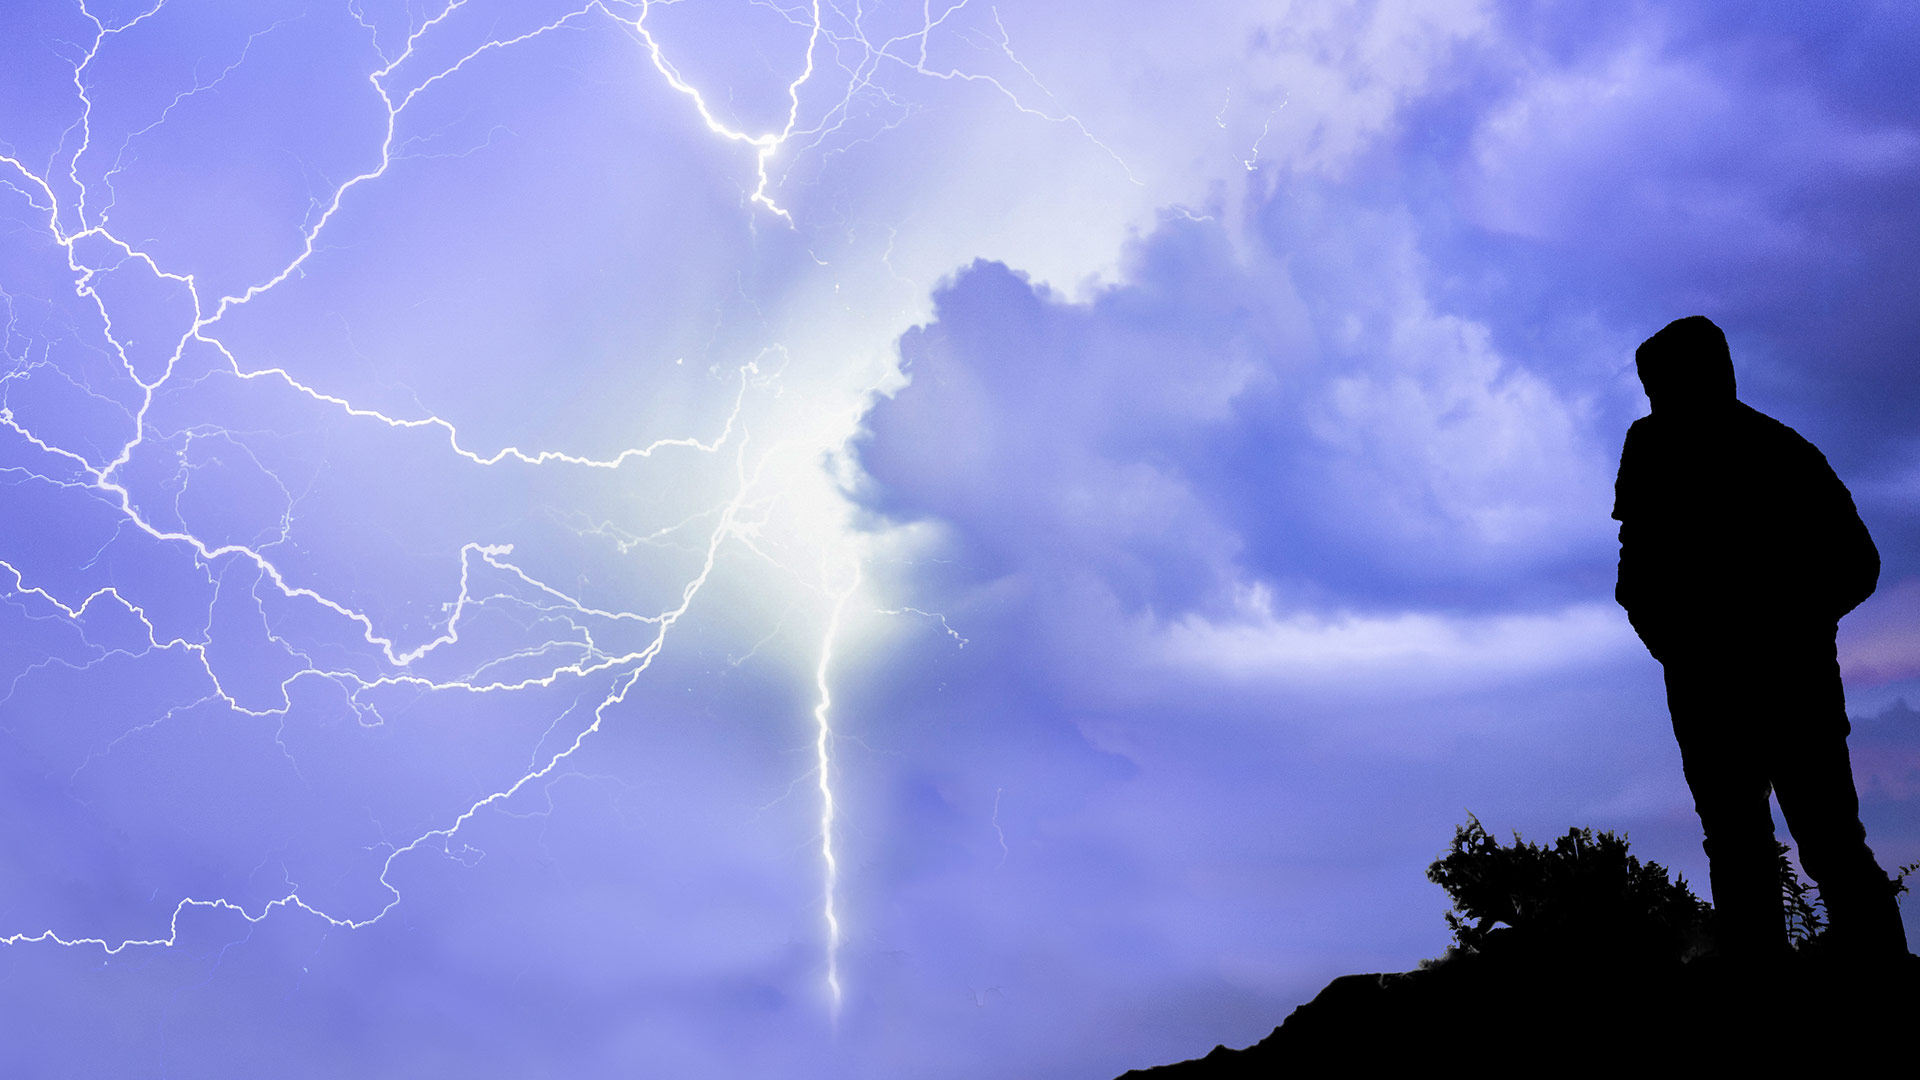 lightning storm 7 ways to die game